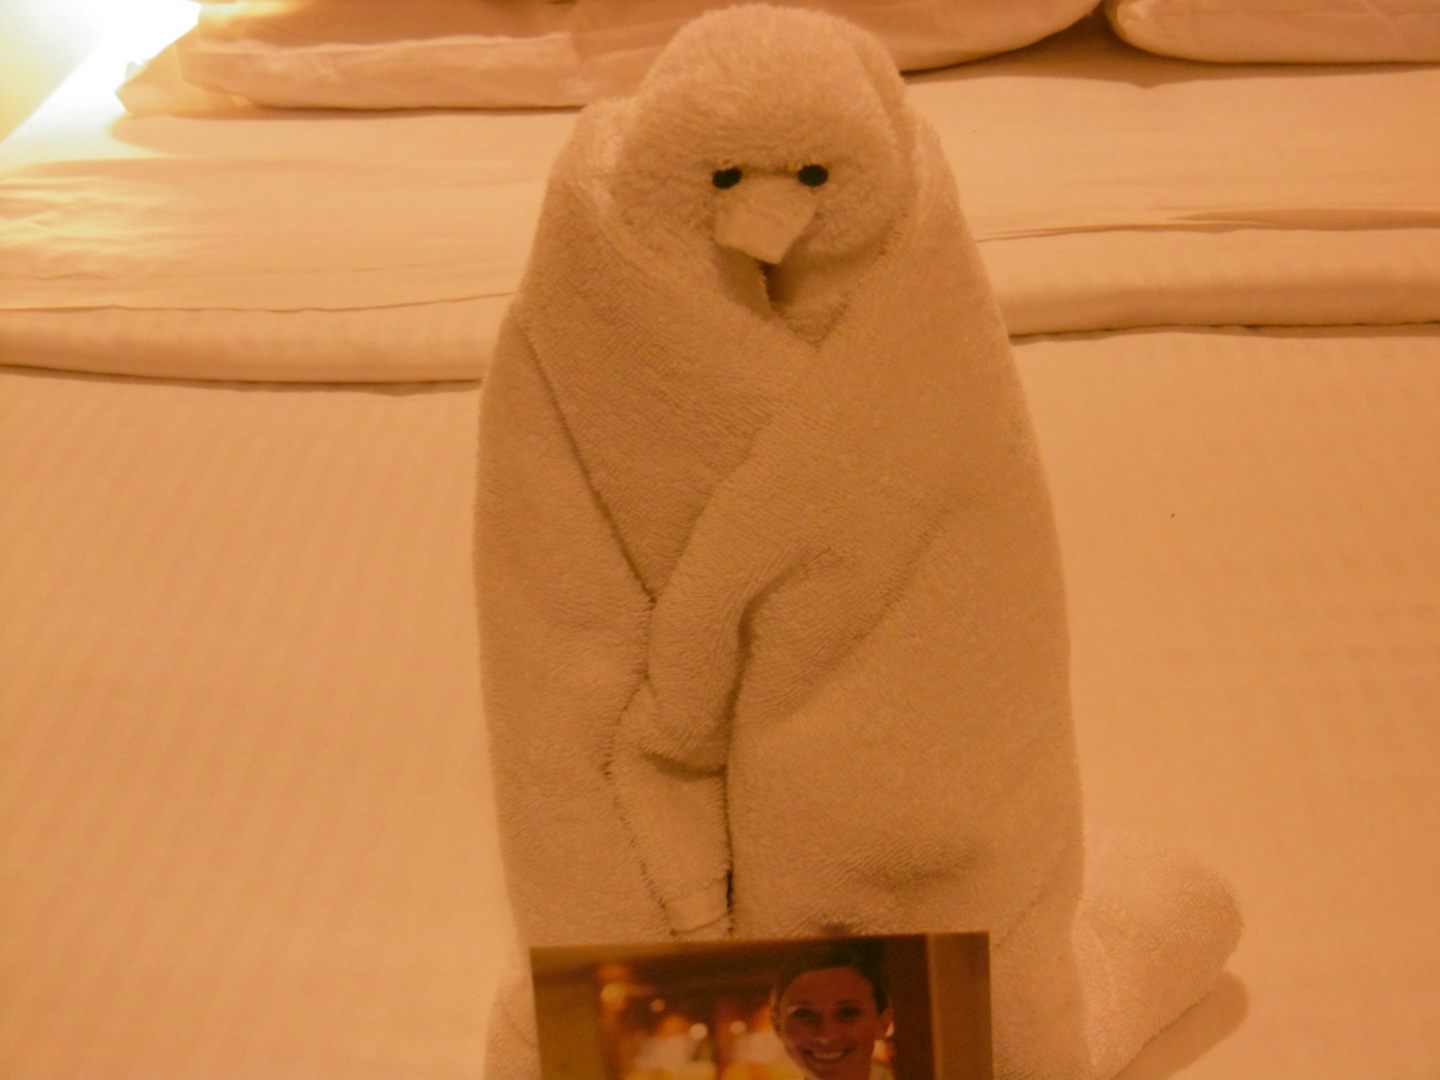 Towel art - I think it is a penguin